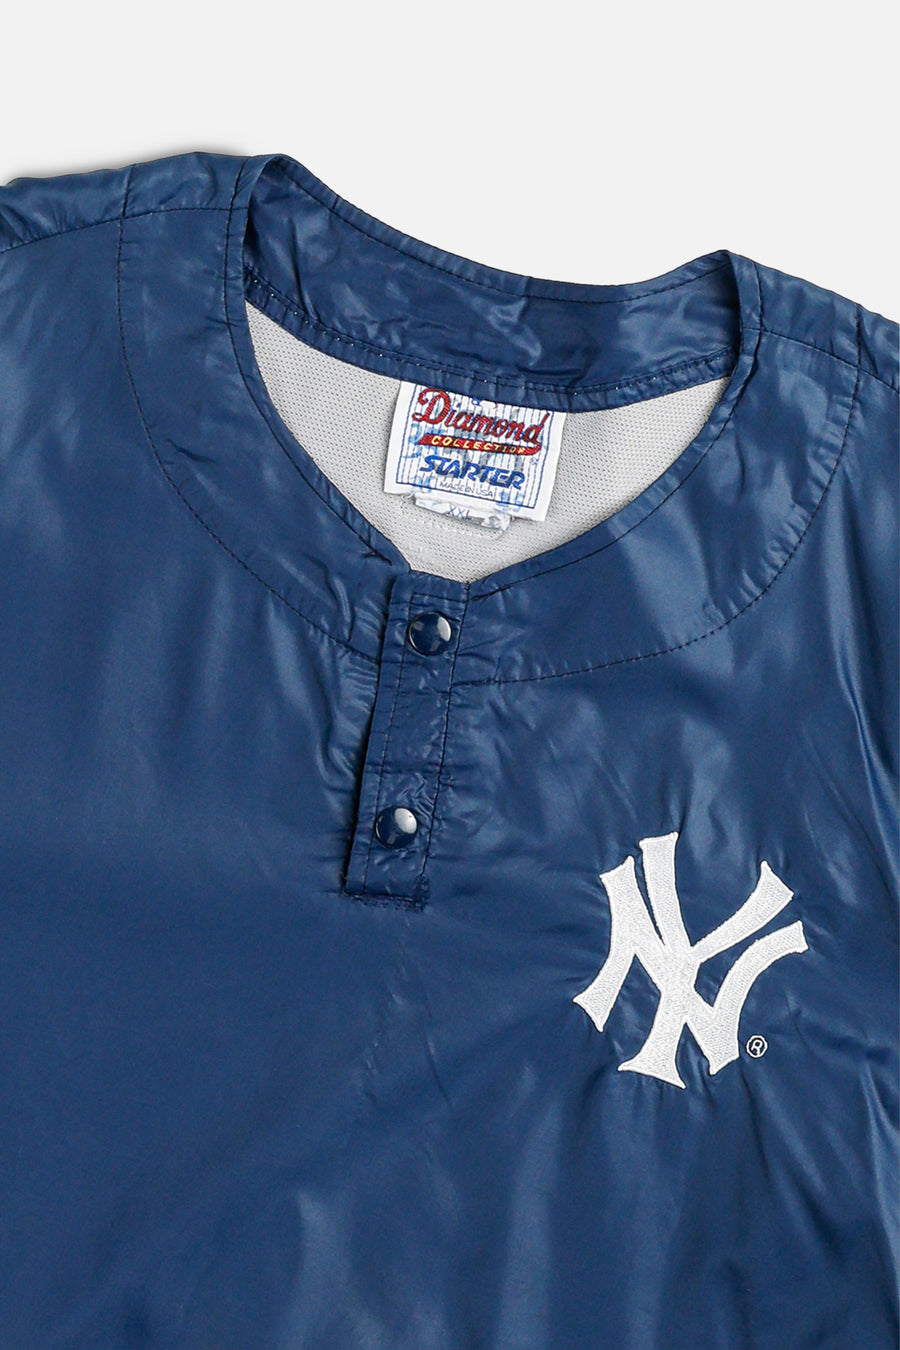 Vintage NY Yankees MLB Windbreaker Jacket - XXL